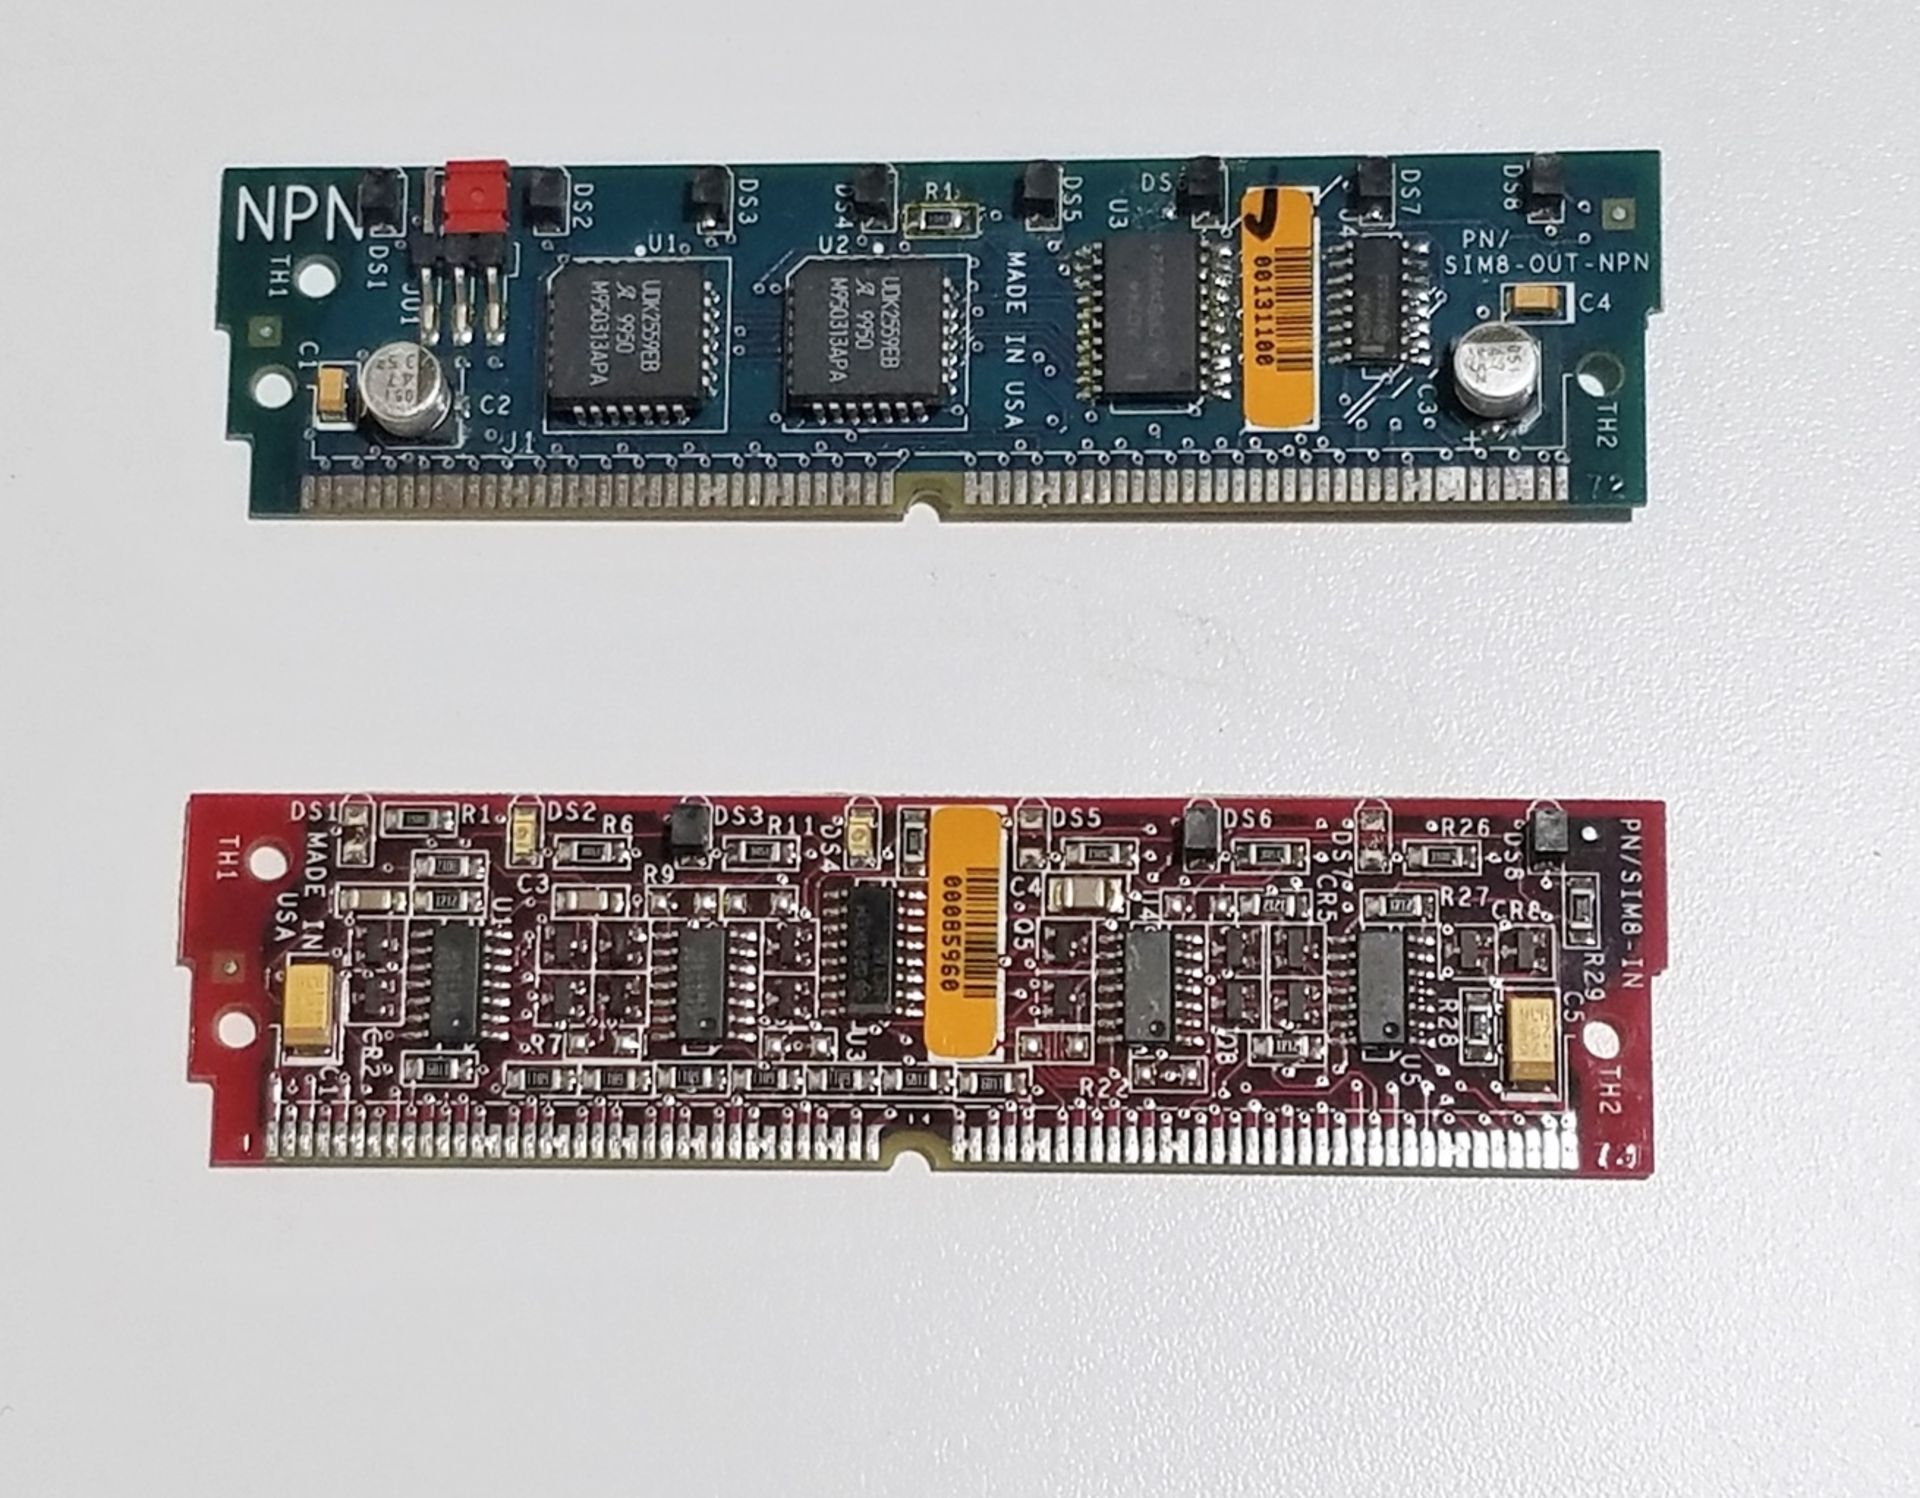 Parker Compumotor SIM Cards, SIM8-IN, SIM8-OUT-NPN